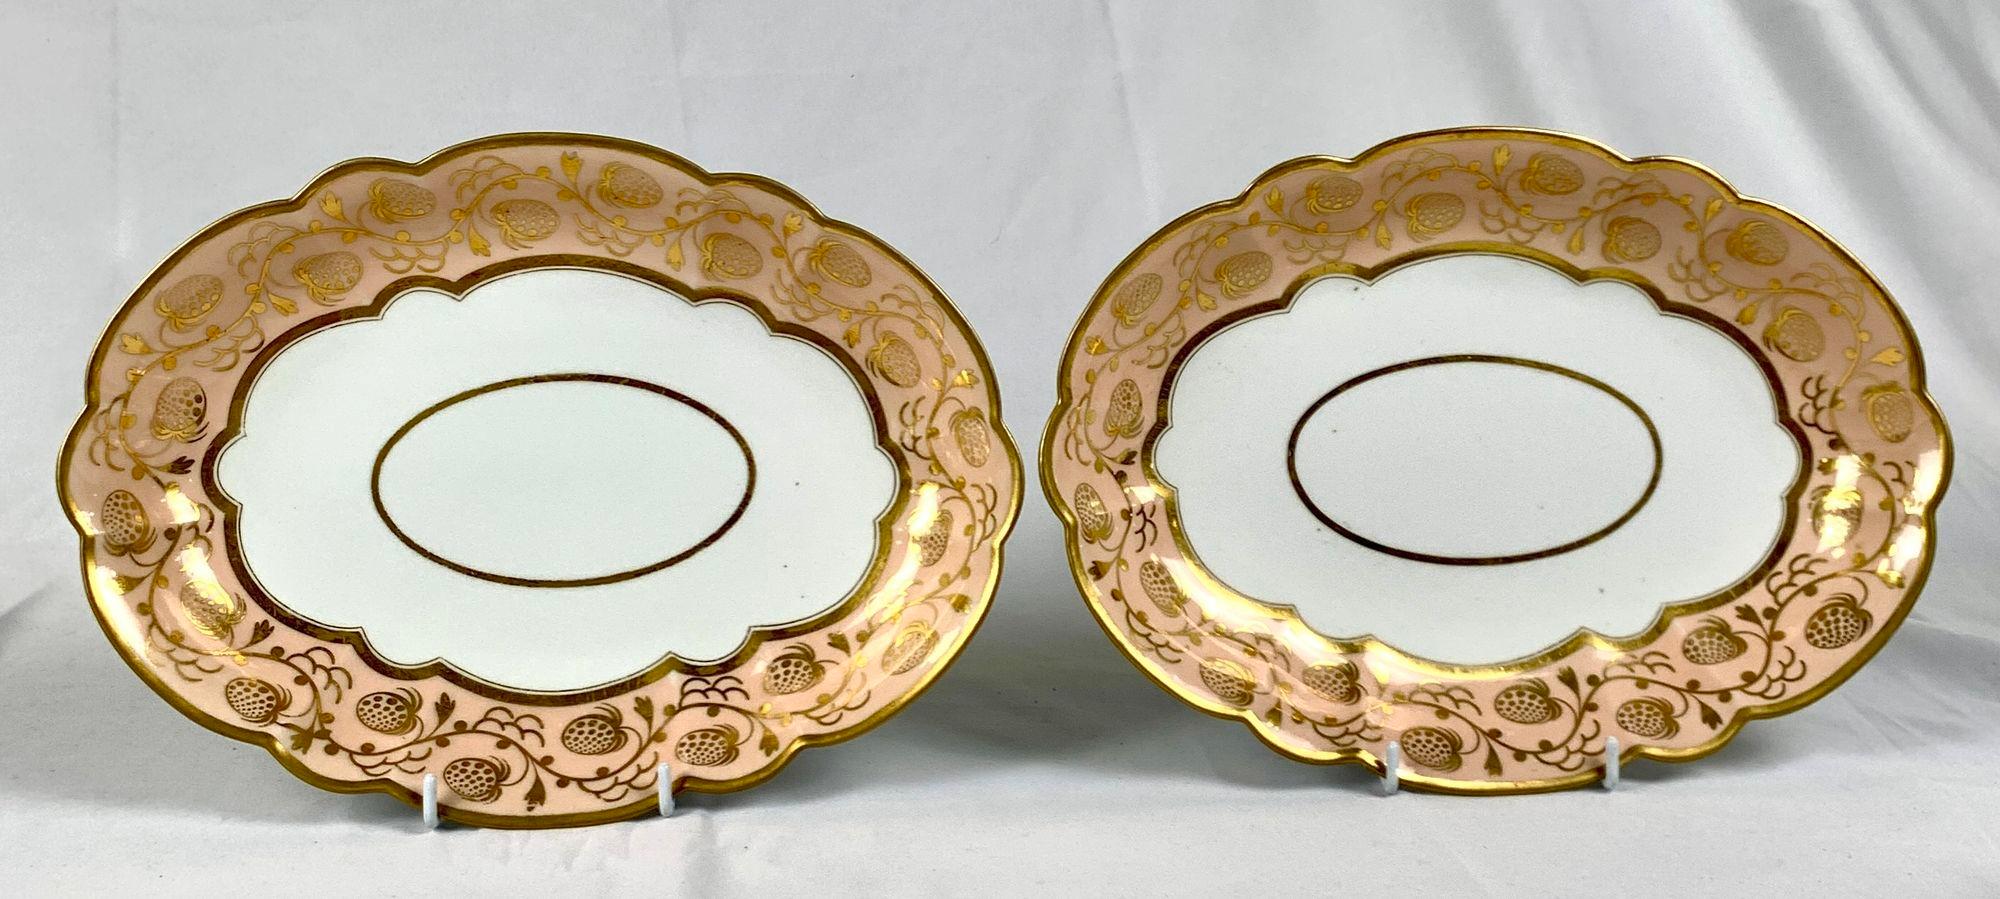 Antique Worcester Porcelain Dessert Service Decorated in Gold England C-1820 For Sale 6